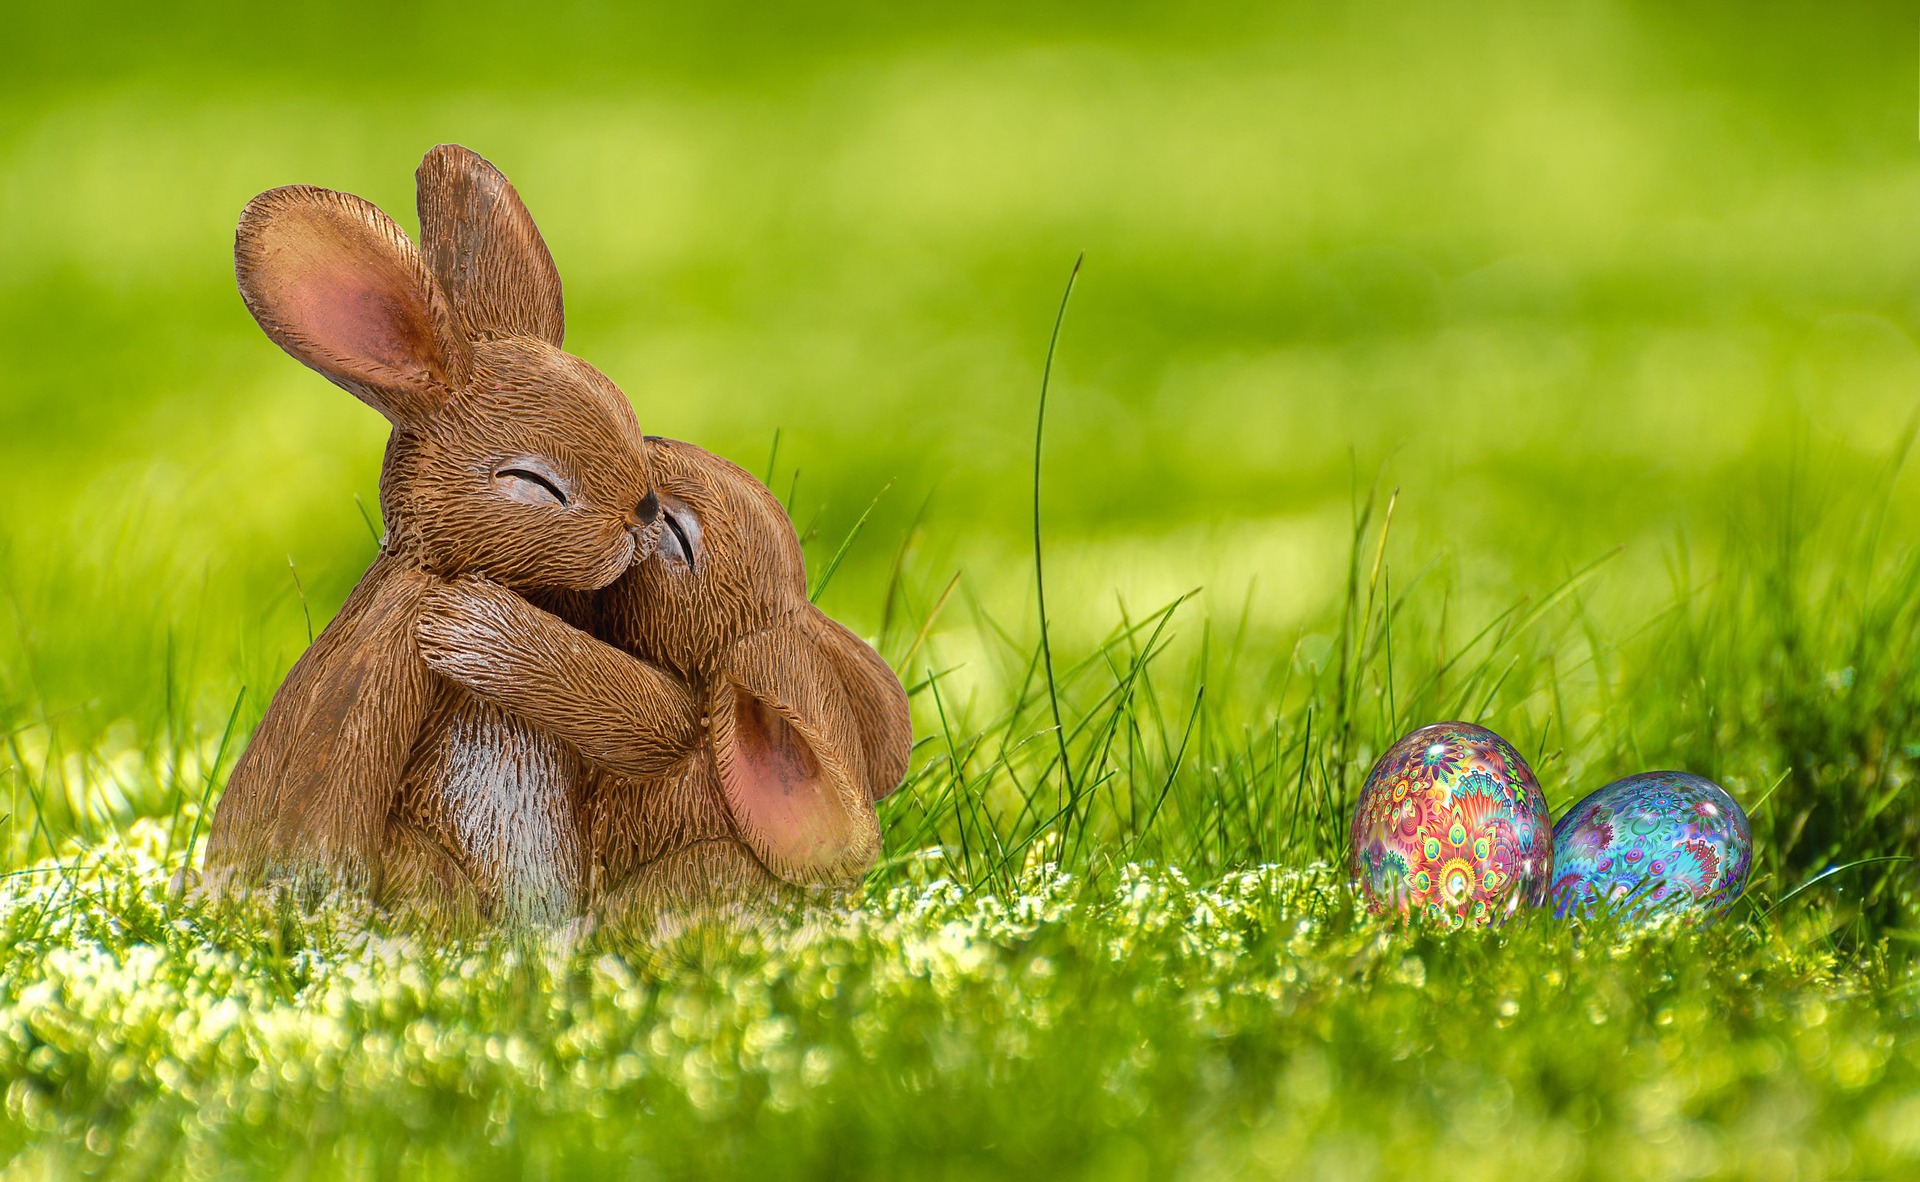 Easter bunny & easter eggs